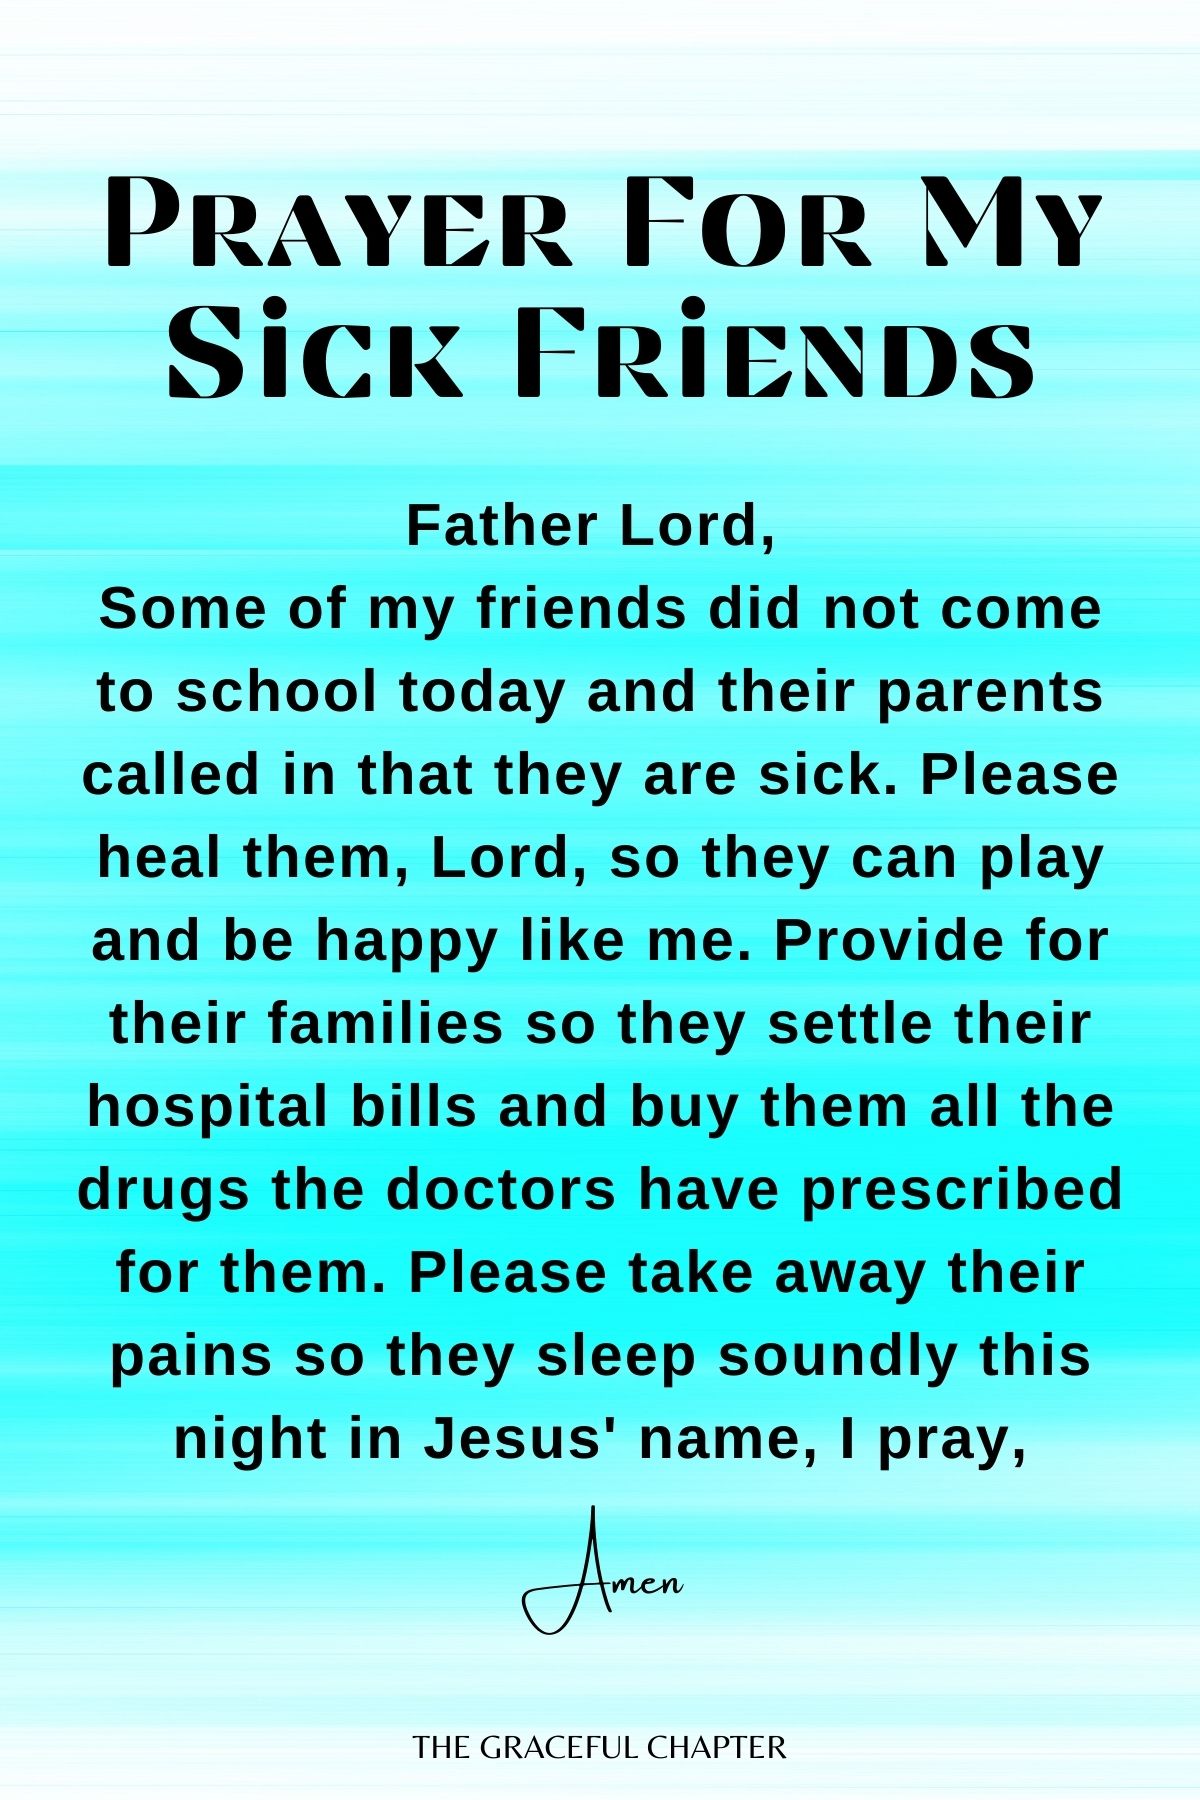 Prayer for my sick friends